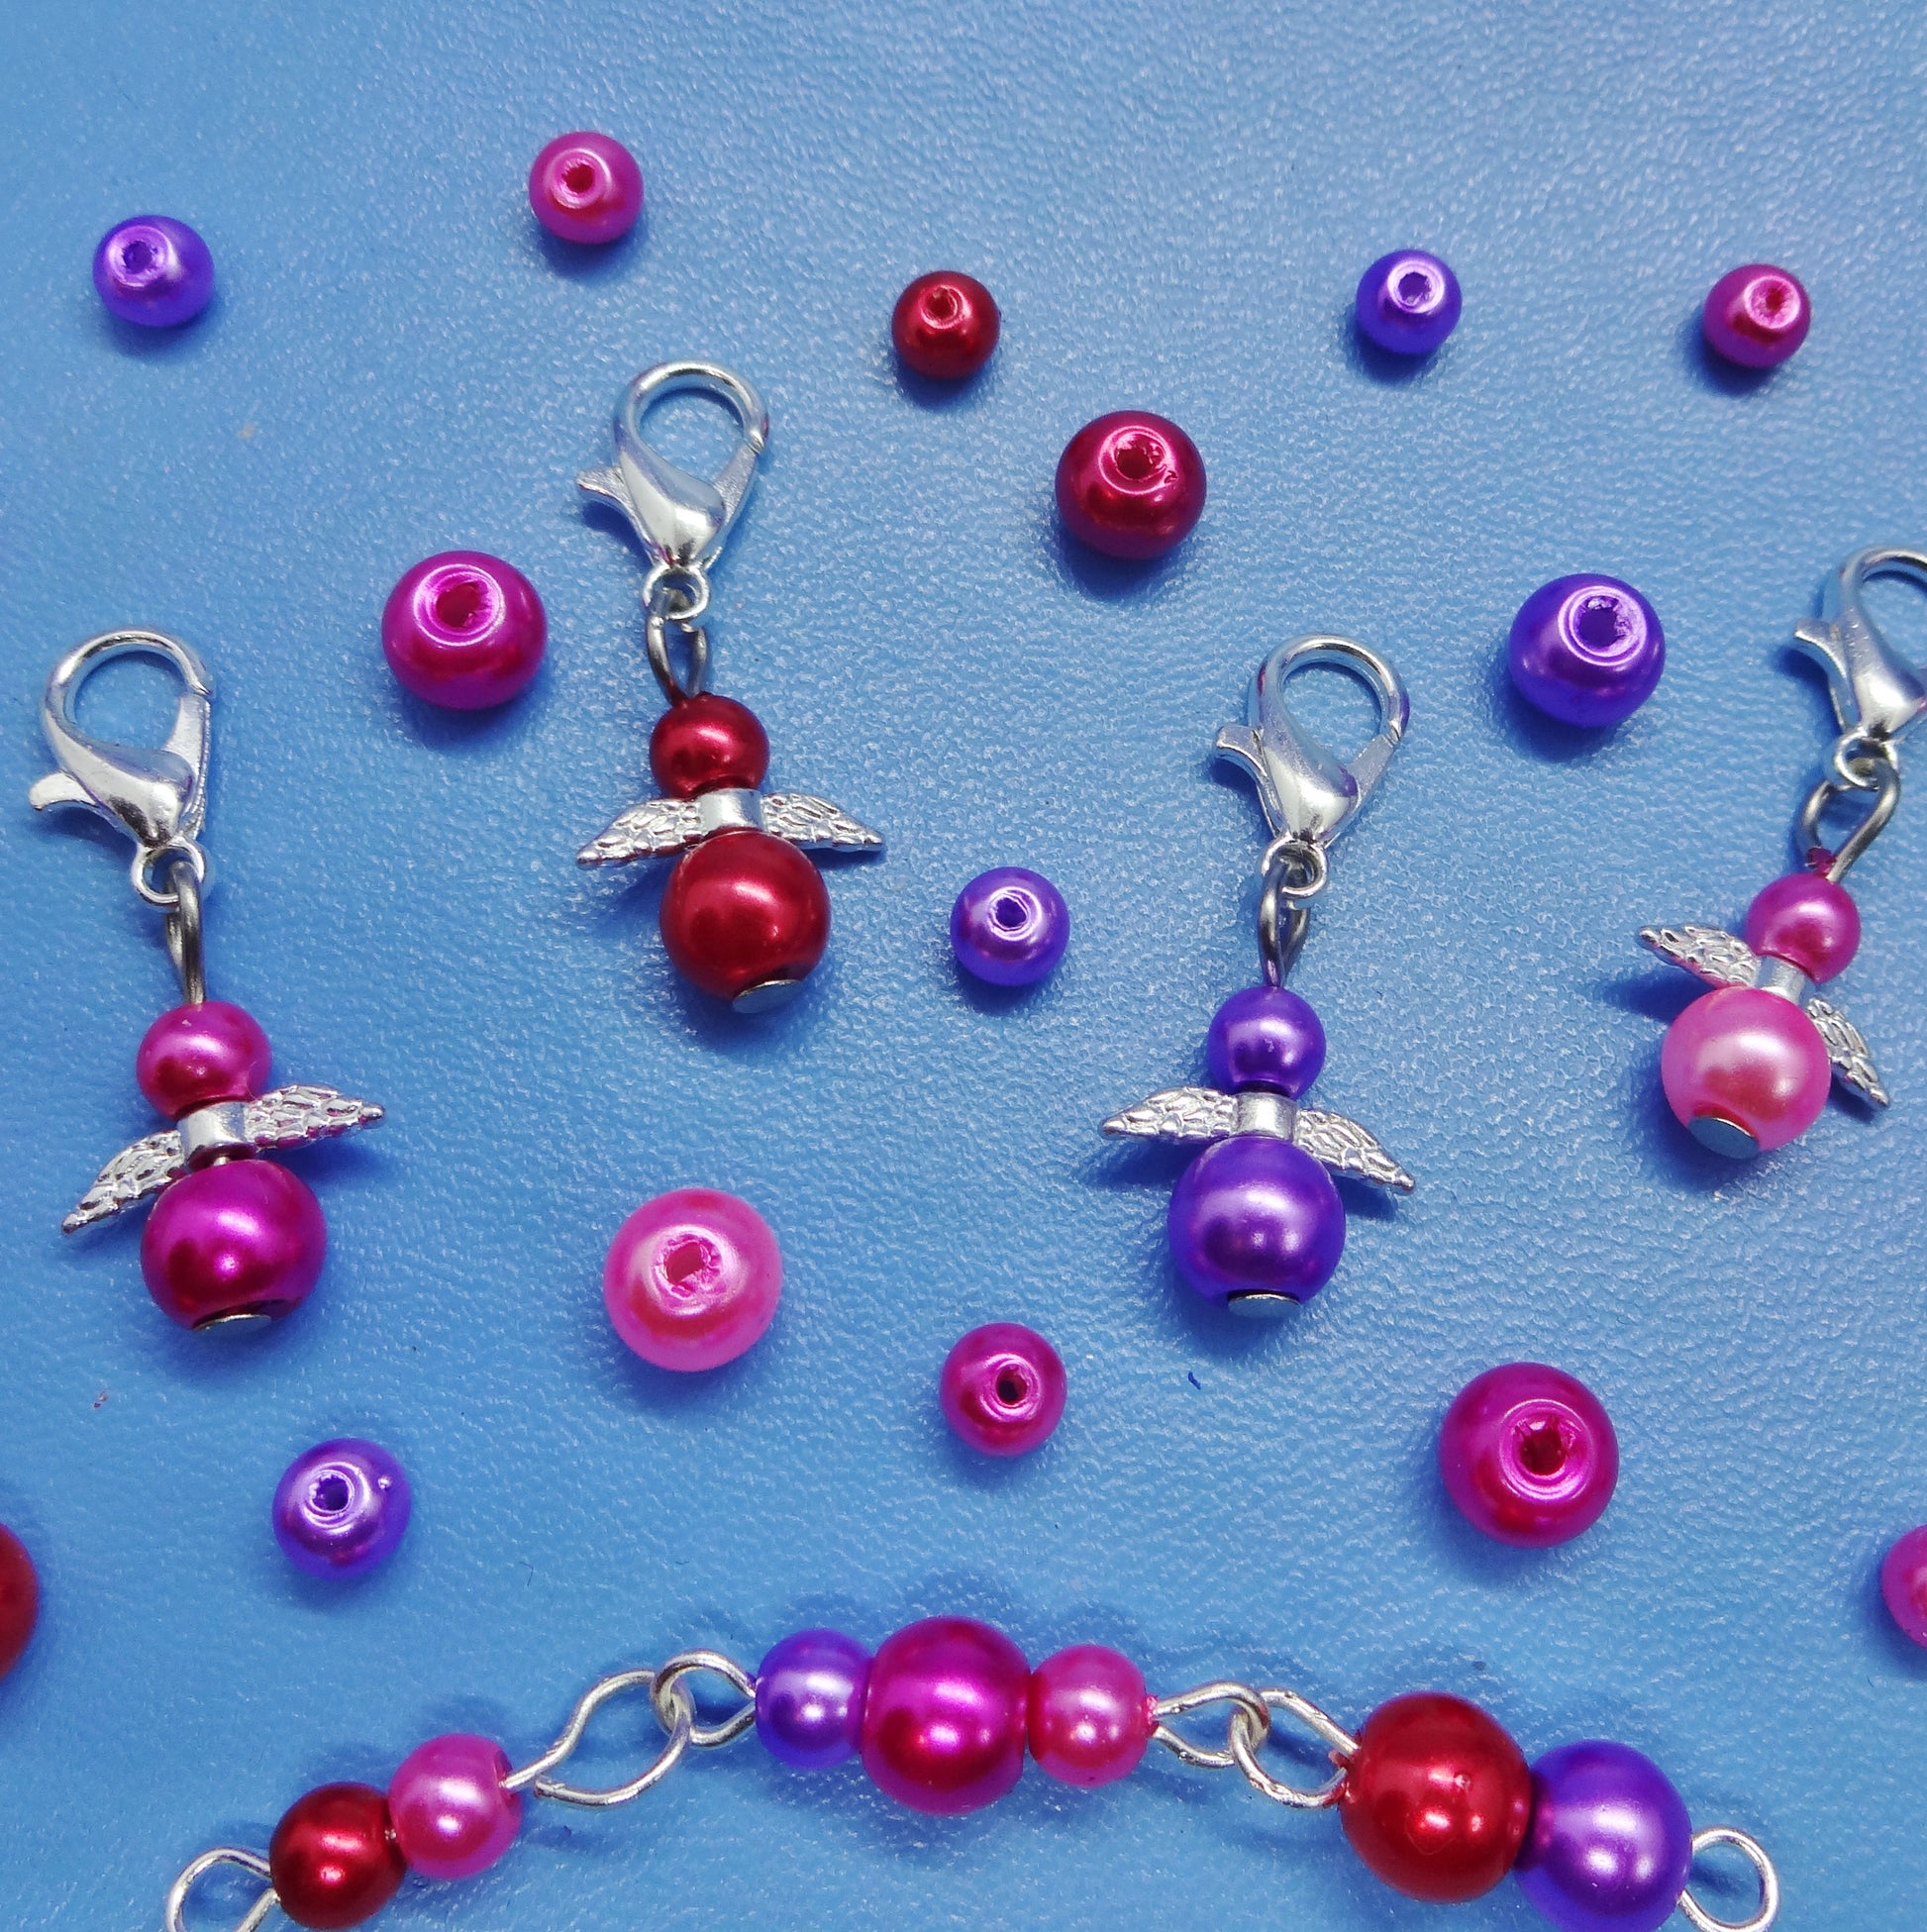 Needle Nose Tweezers (Each)  BeadKraft Wholesale Beads and